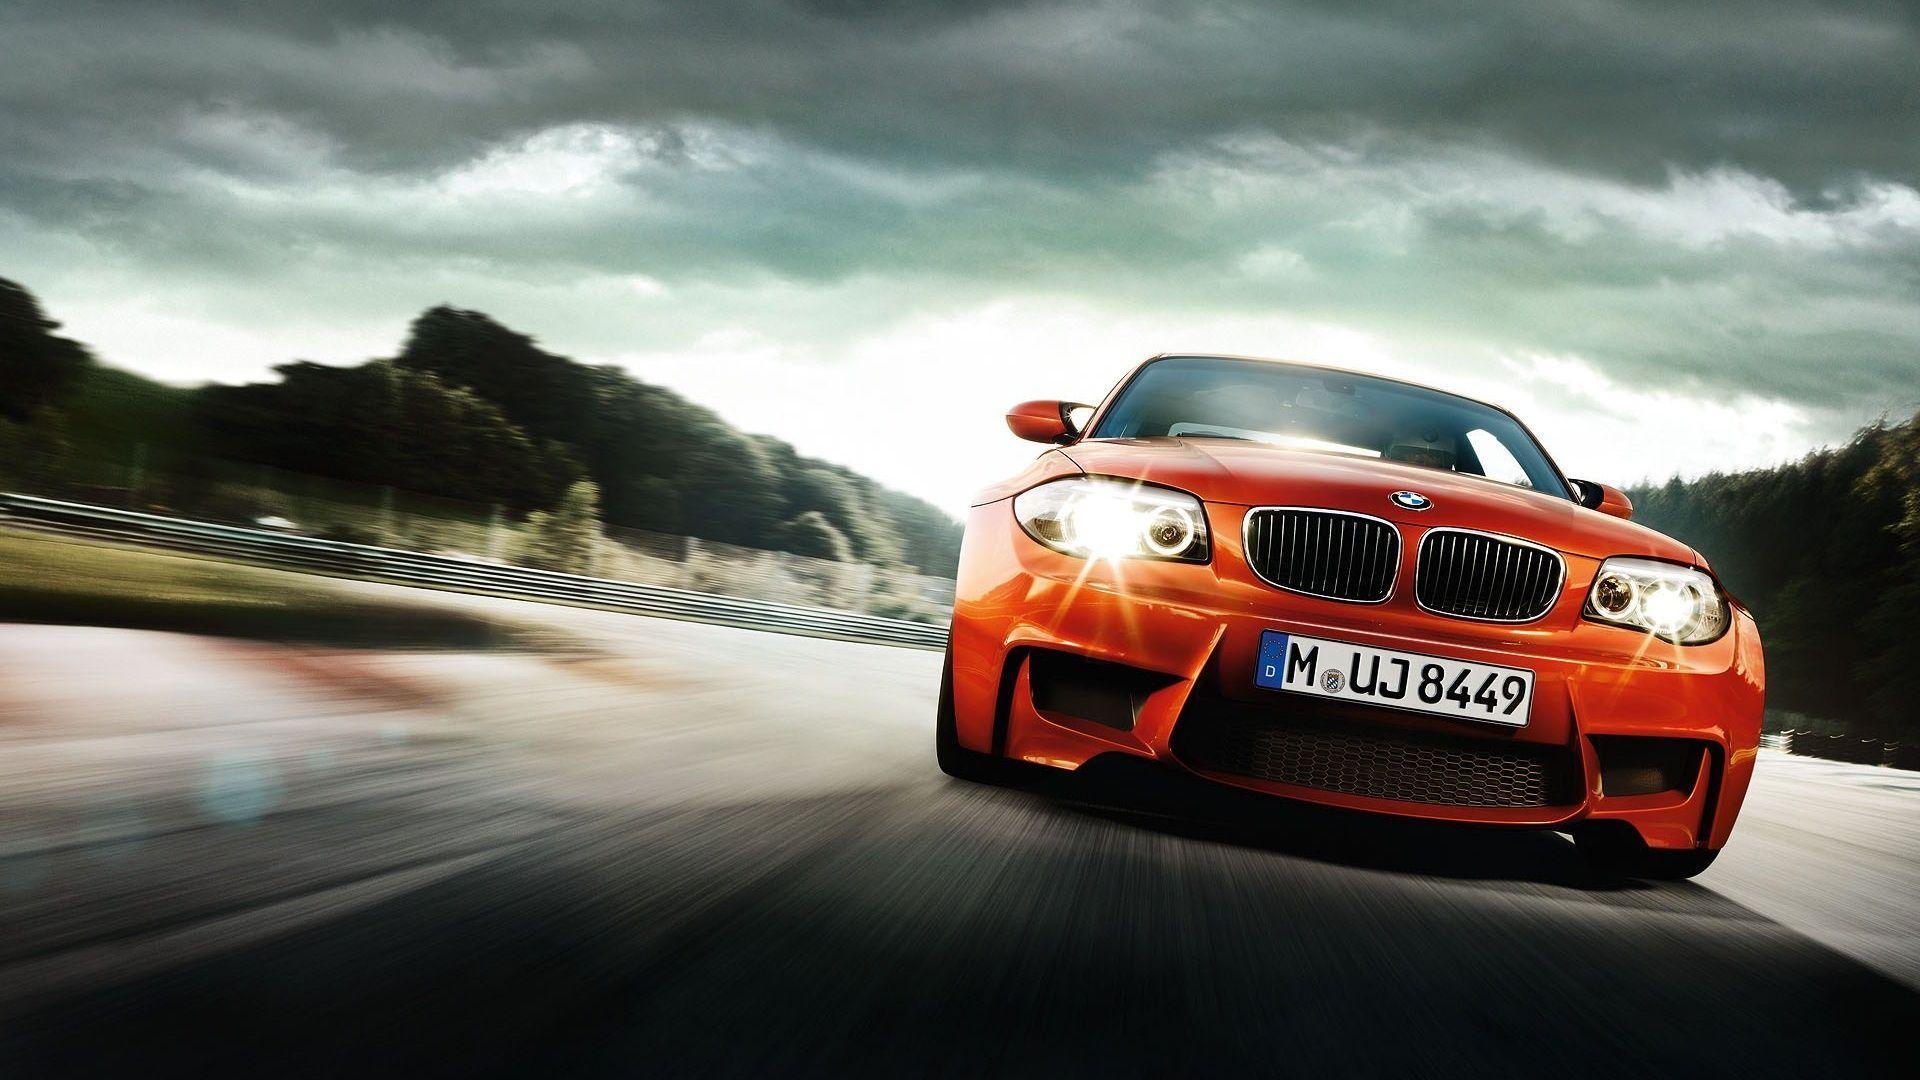 BMW Cars Wallpaper HD Free Download. New HD Wallpaper Download